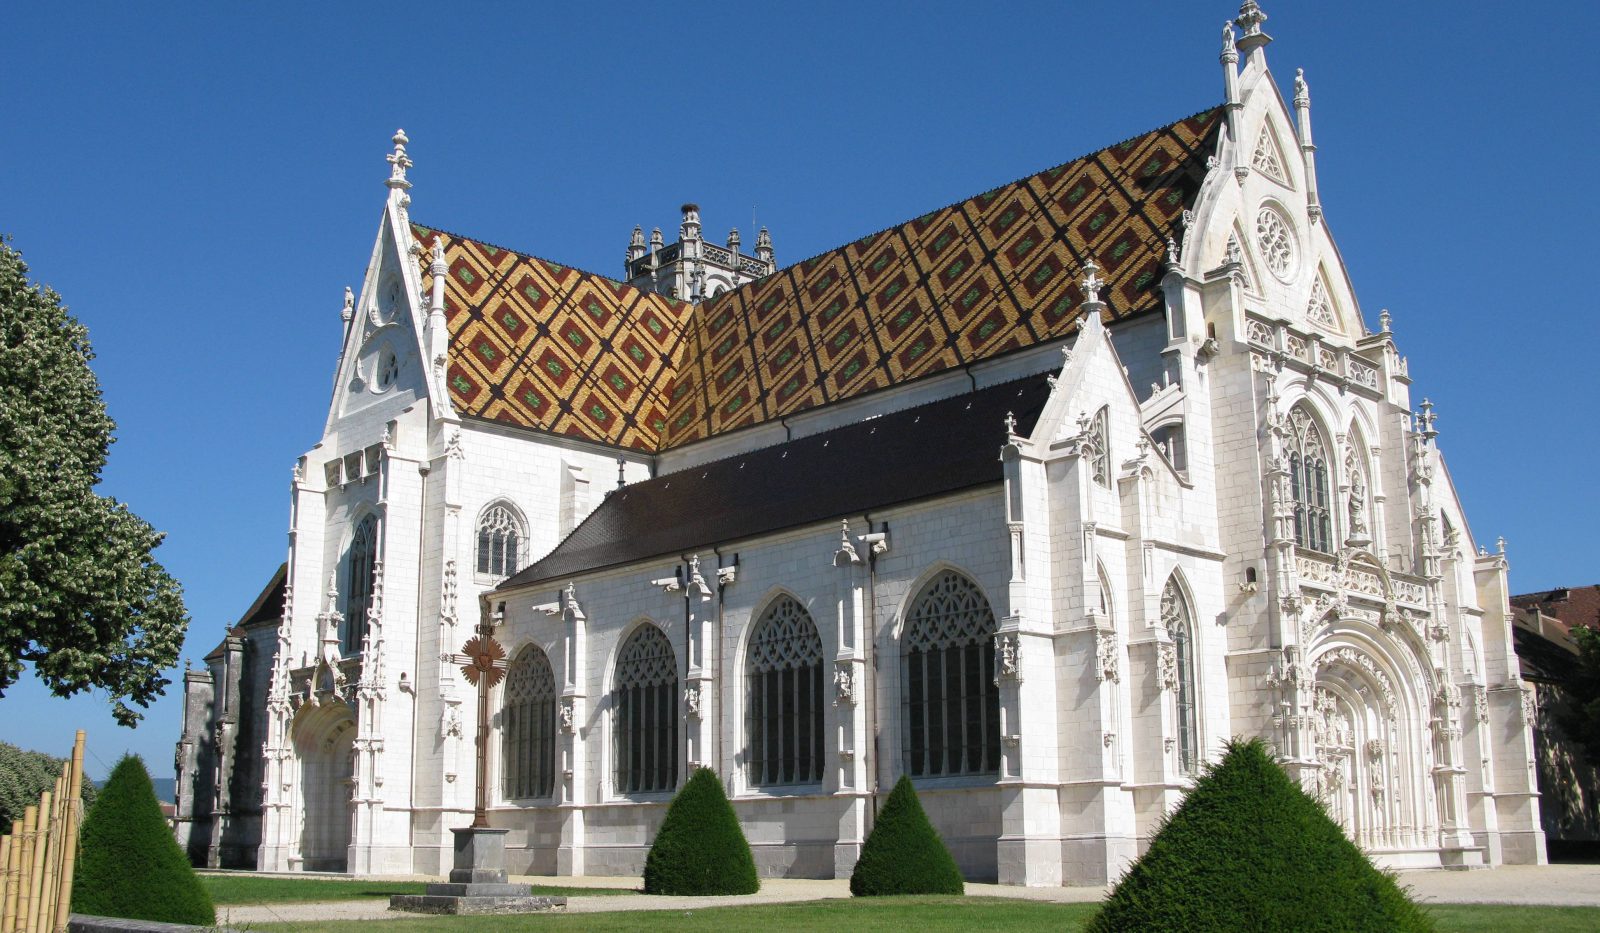 monastere-royal-de-brou-bourg-en-bresse_credit-ap-ot-bourg-en-bresse-agglomeration-copie